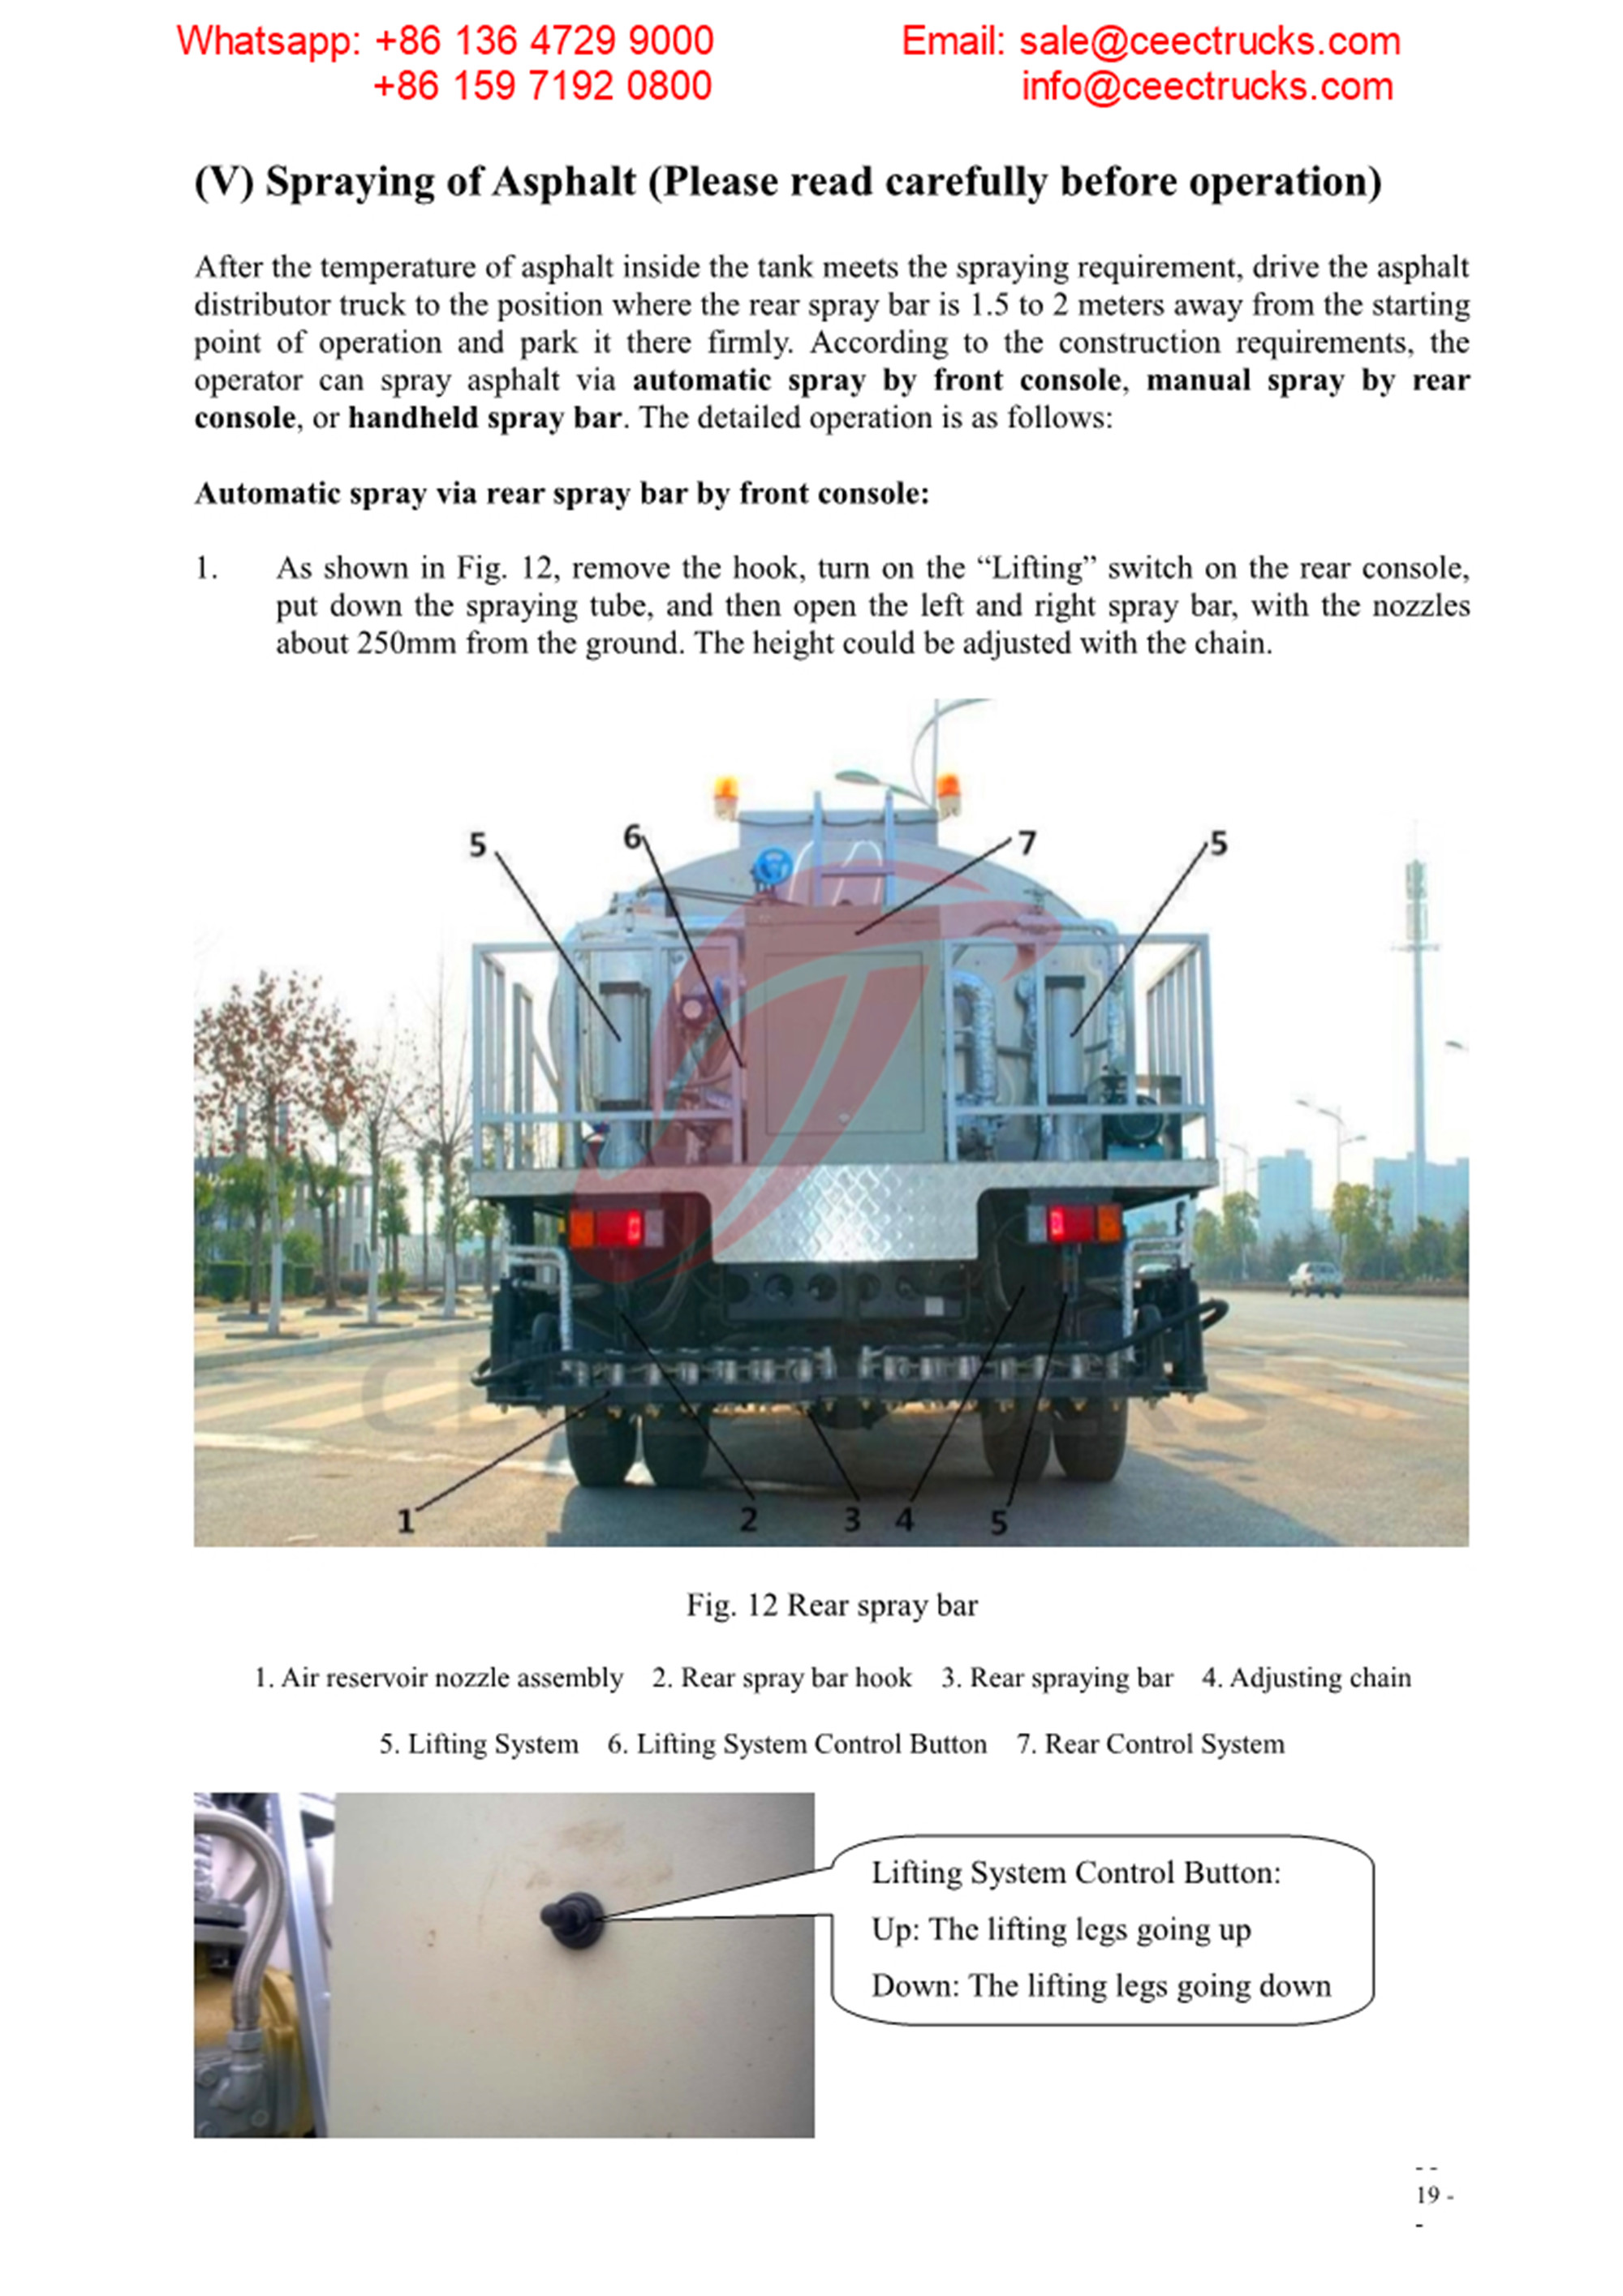 Myanmar customer buy asphalt distribution truck